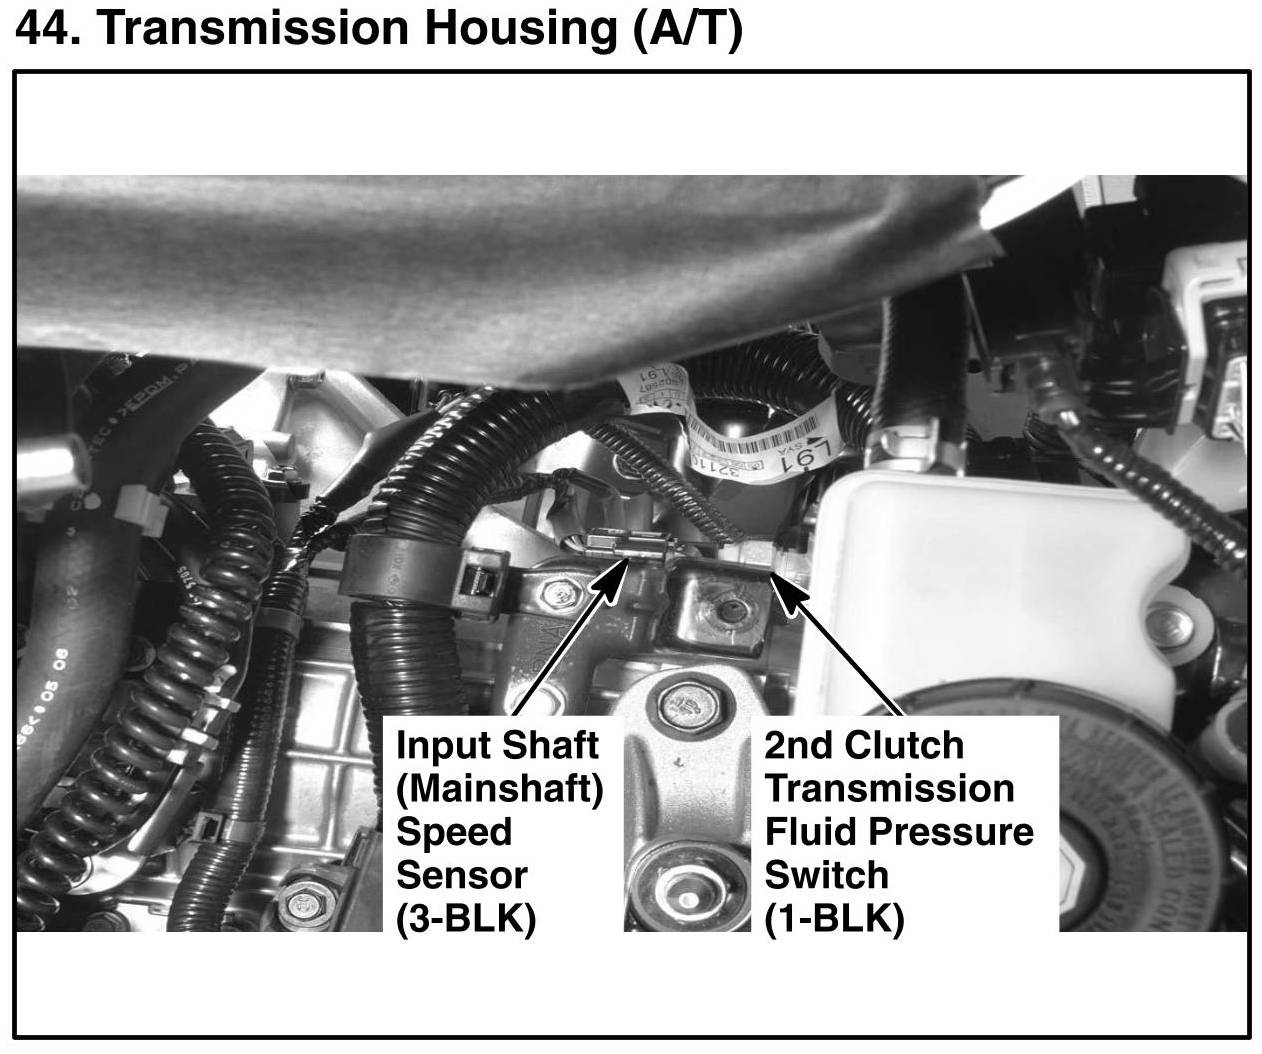 Output transmission speed sensor location